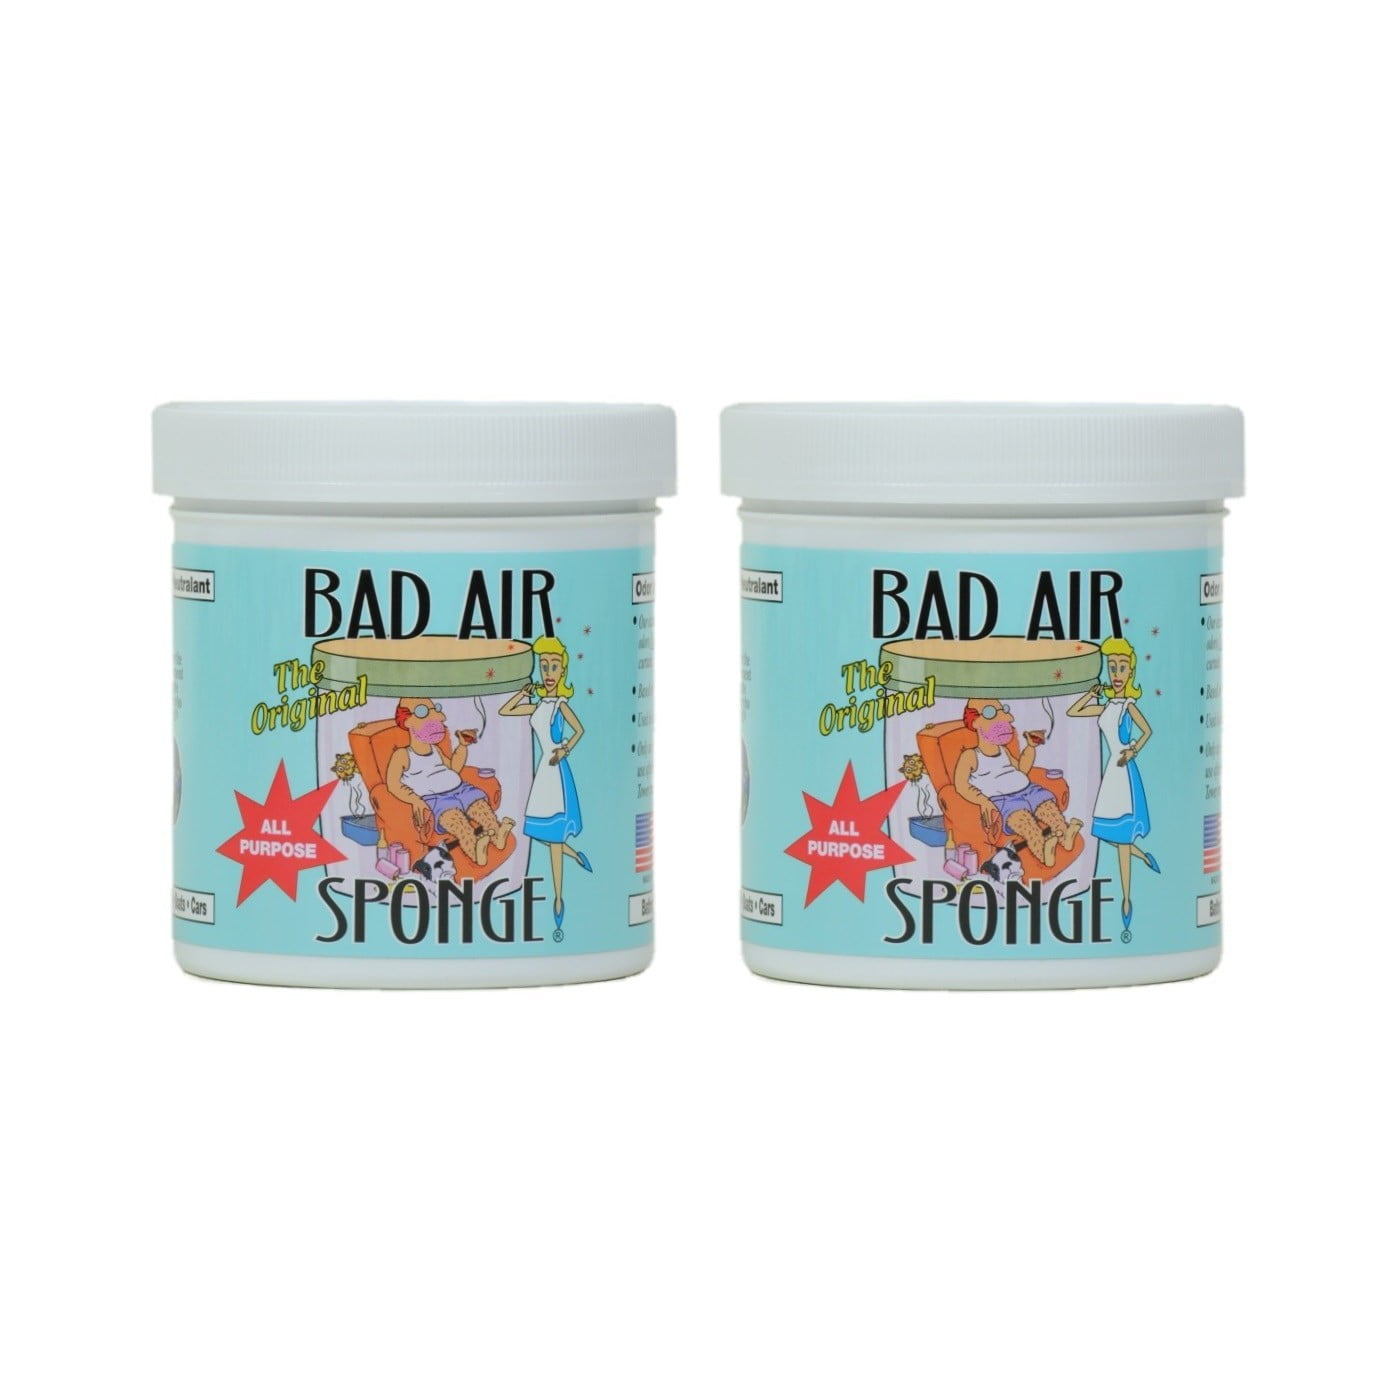 Bad Air Sponge 2 lb. Air Odor Absorbent